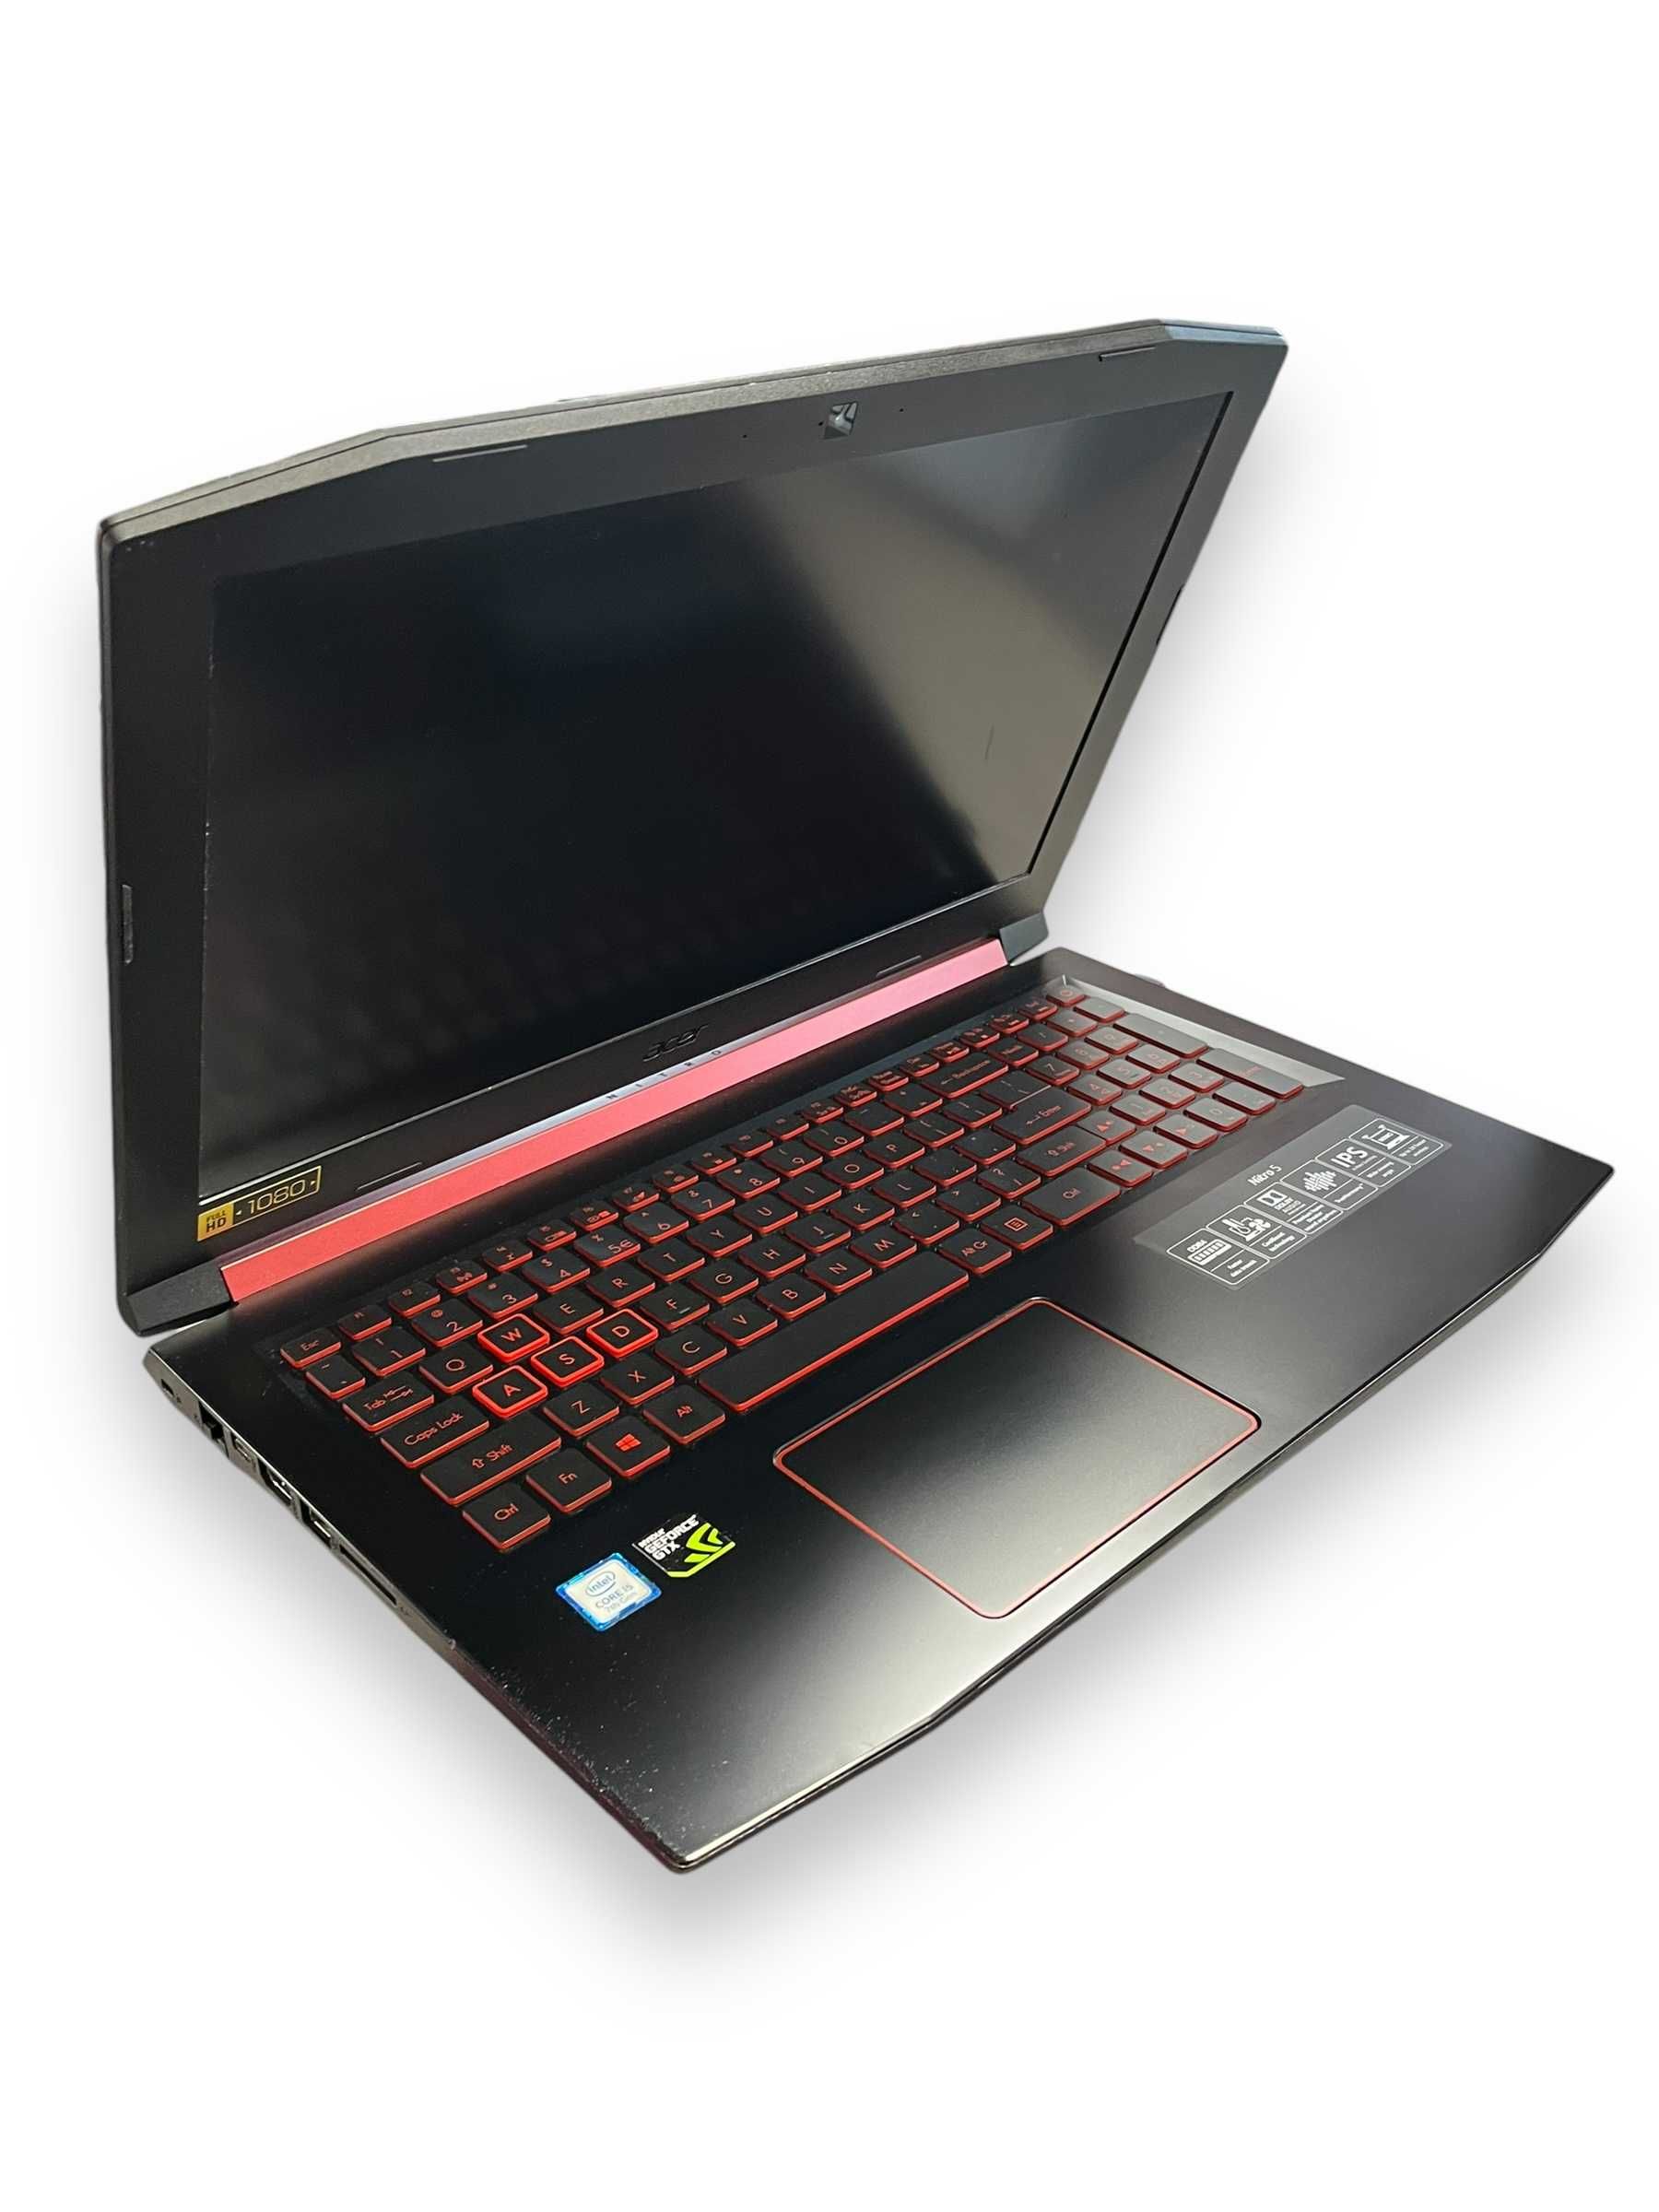 Laptop ACER Nitro 5 AN515 i5-7300/8 GB/1000 GB/GeForce GTX 1050